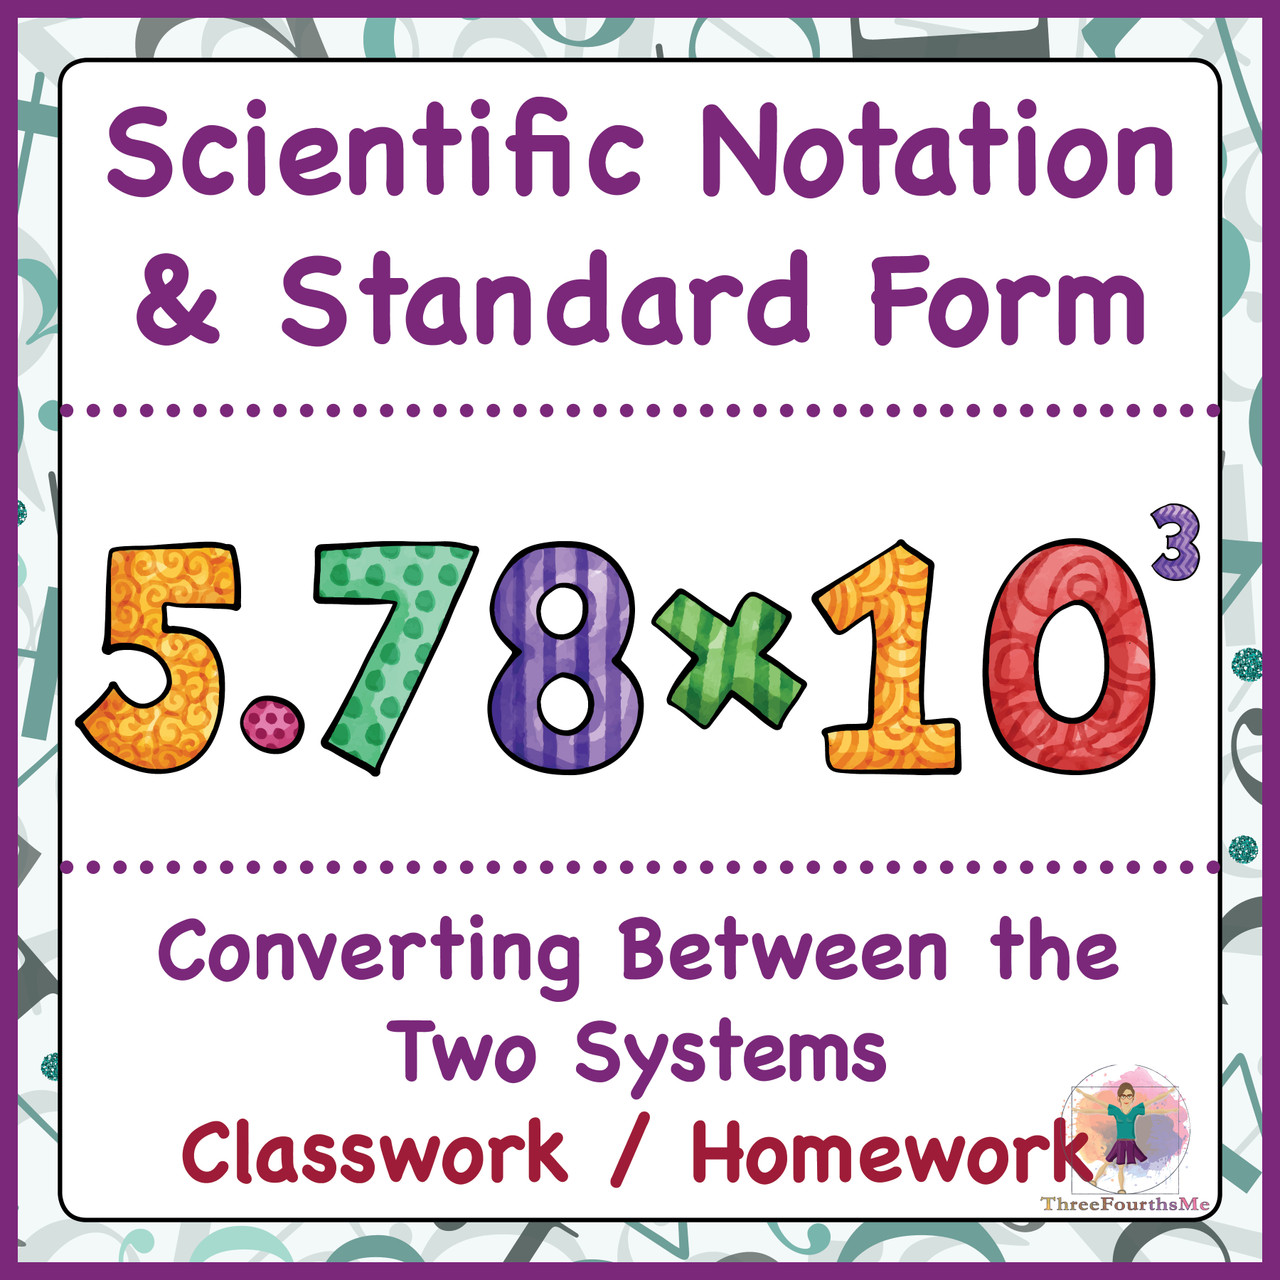 Scientific Notation Classwork / Homework